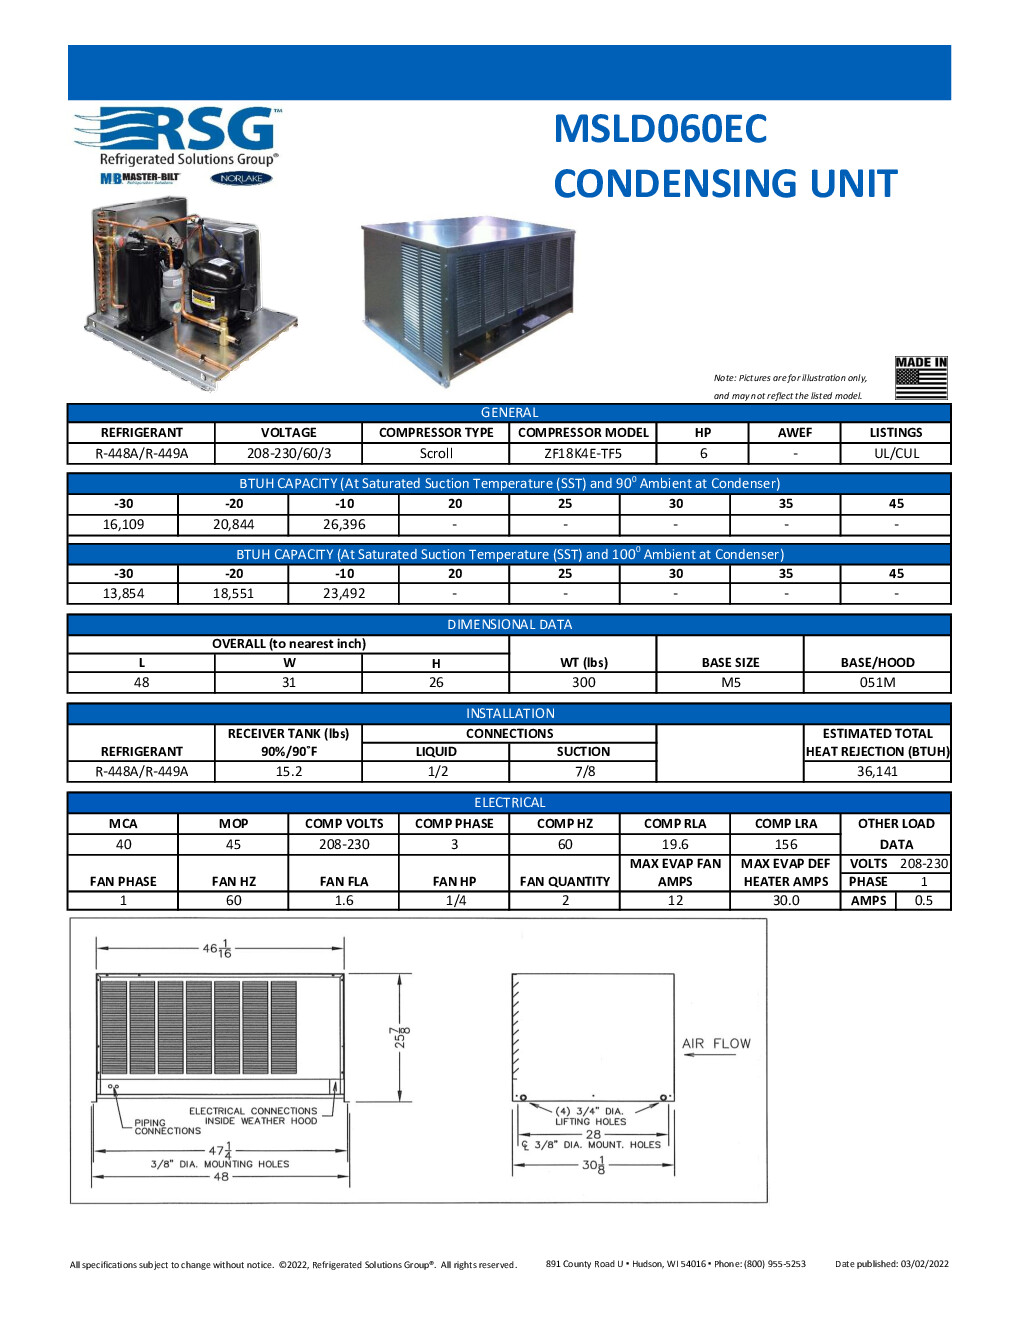 Master-Bilt MSLD060EC Remote Low Temp Scroll Condensing Unit, 6 HP, 208-230v/60/3-ph